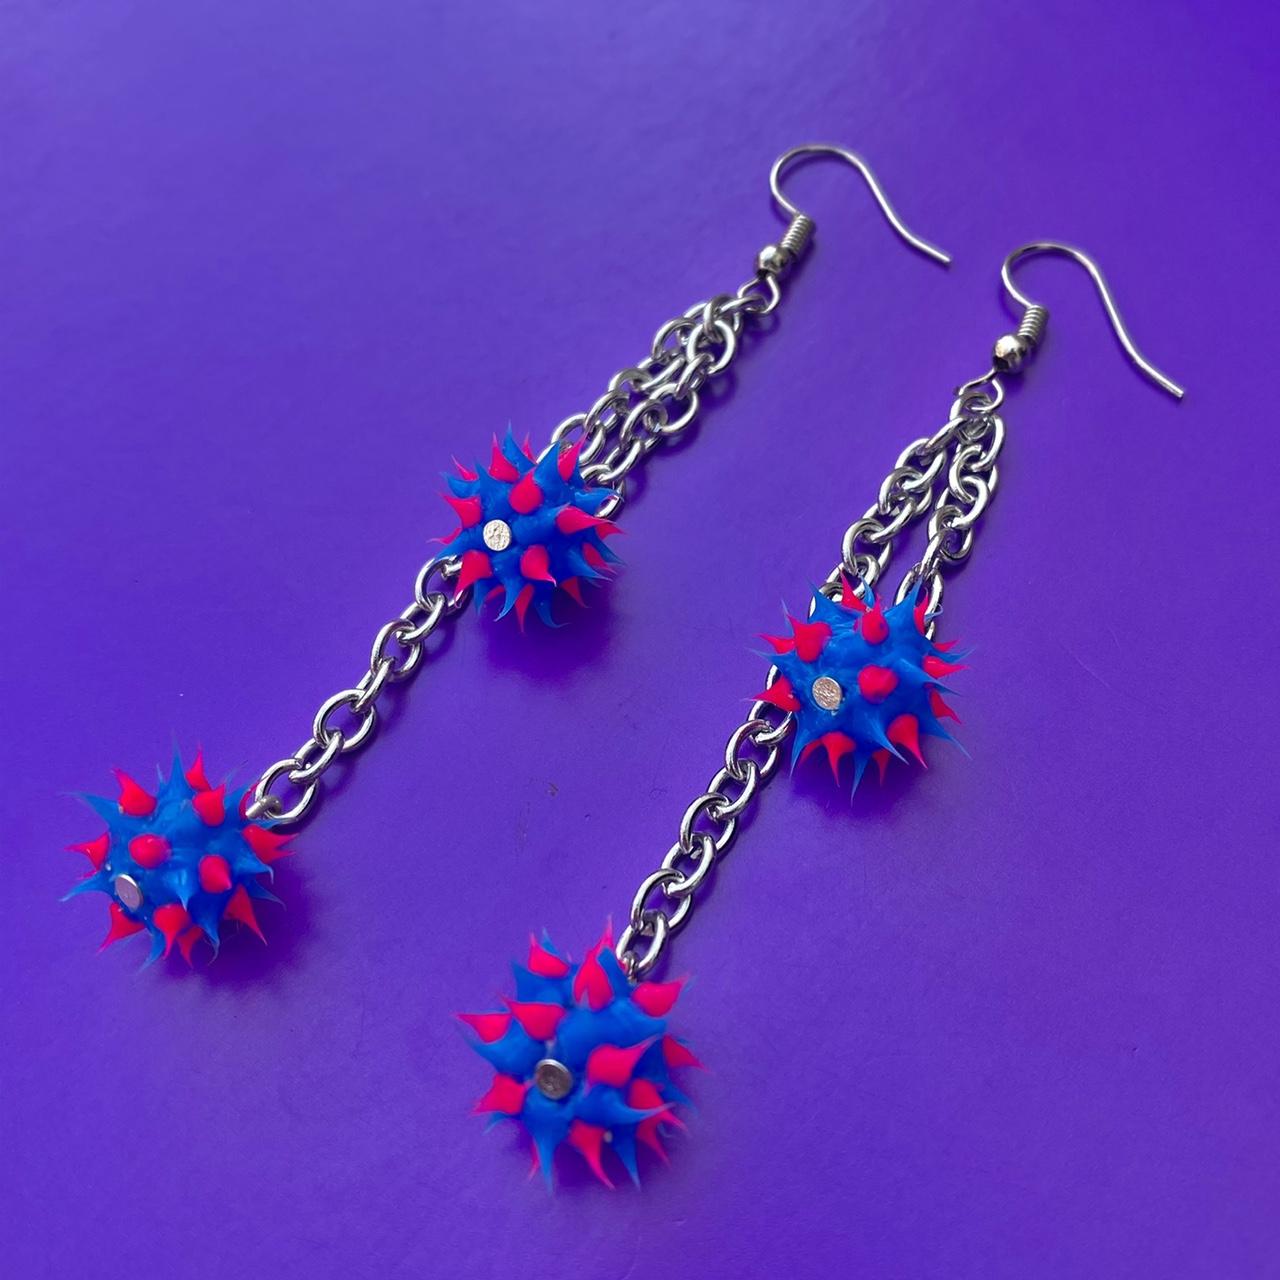 Blue & Hot Pink Spiked Rubber Virus-Looking Dangle Earrings (D007)